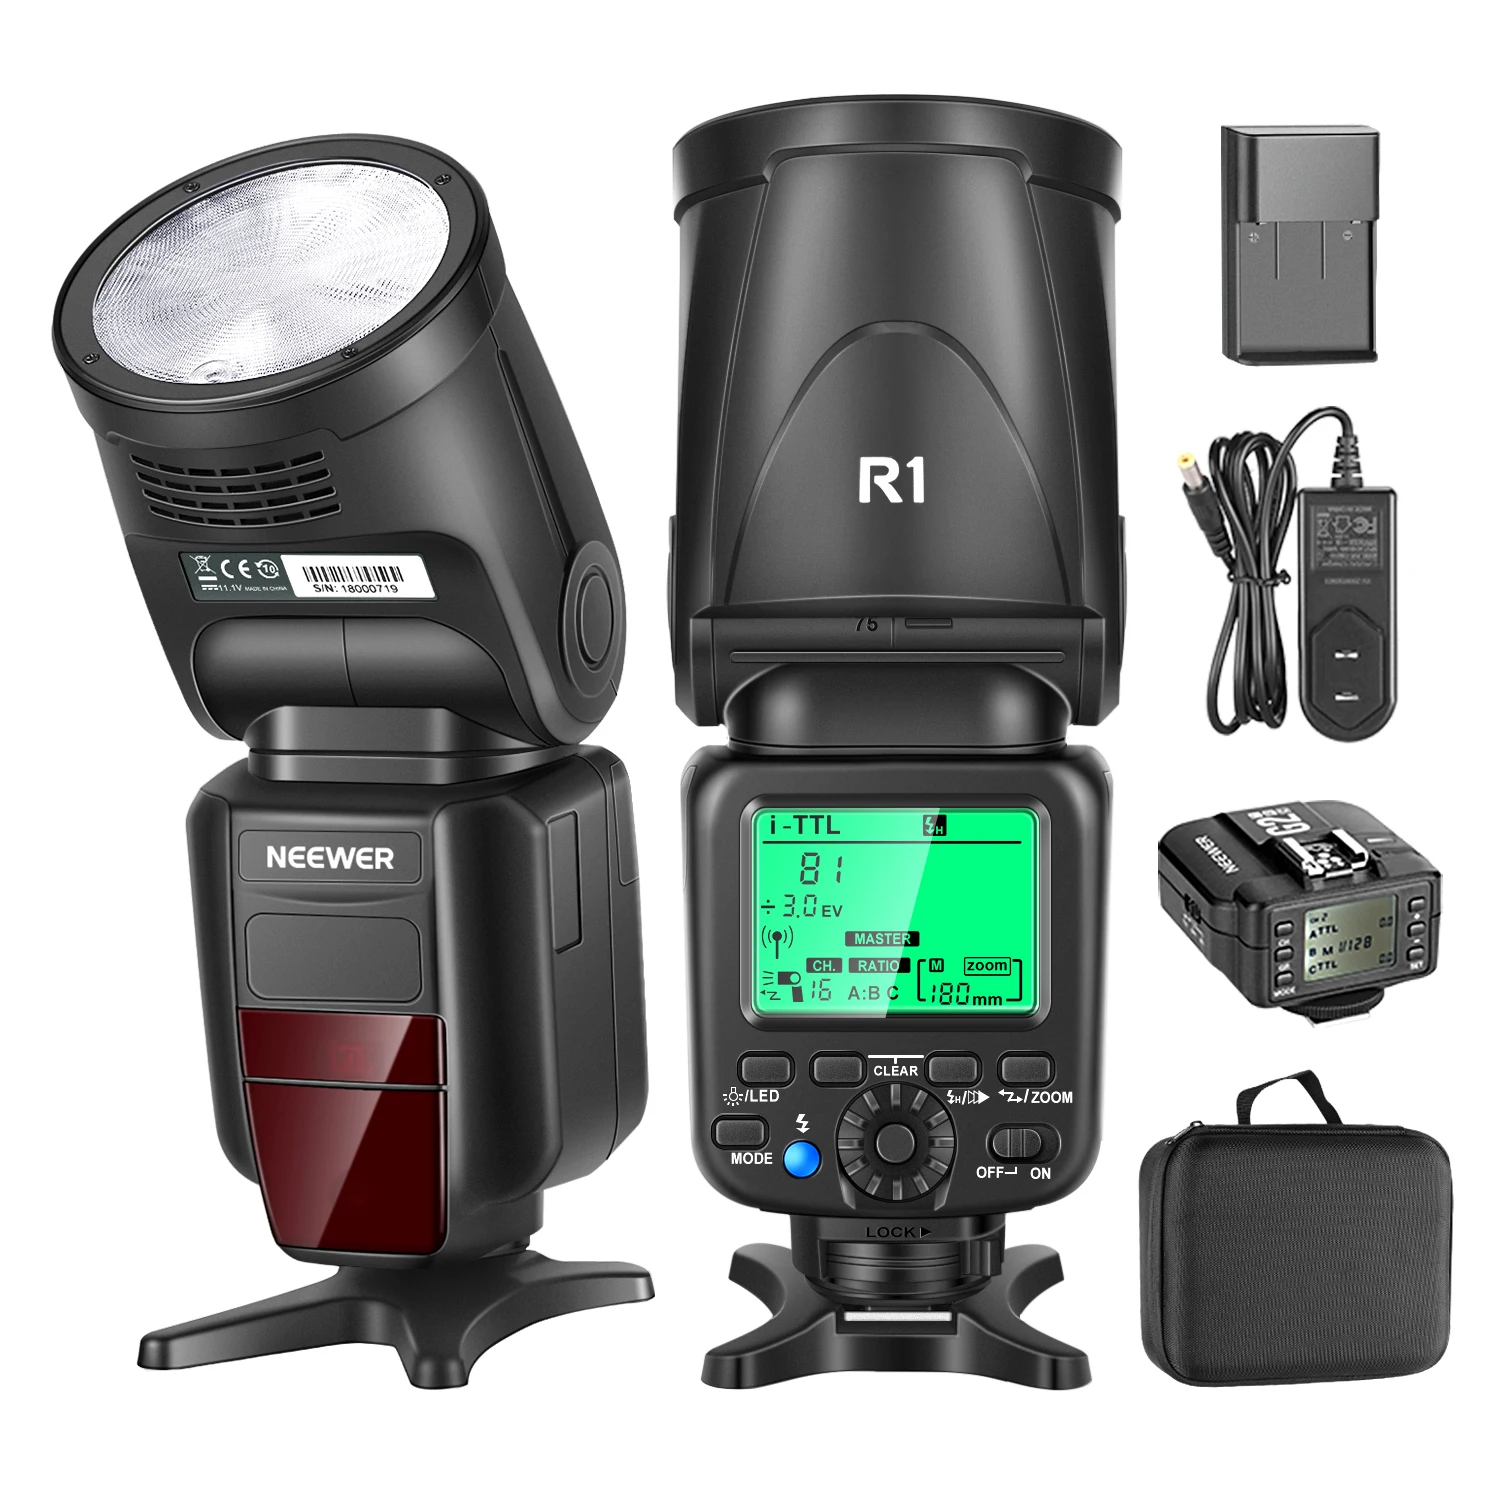 

Neewer R1 TTL вспышка Speedlite для камер Nikon DSLR, 76Ws 2,4G TTL круглая головка, 1/8000s HSS, 2,1 s время перезарядки, литиевая батарея